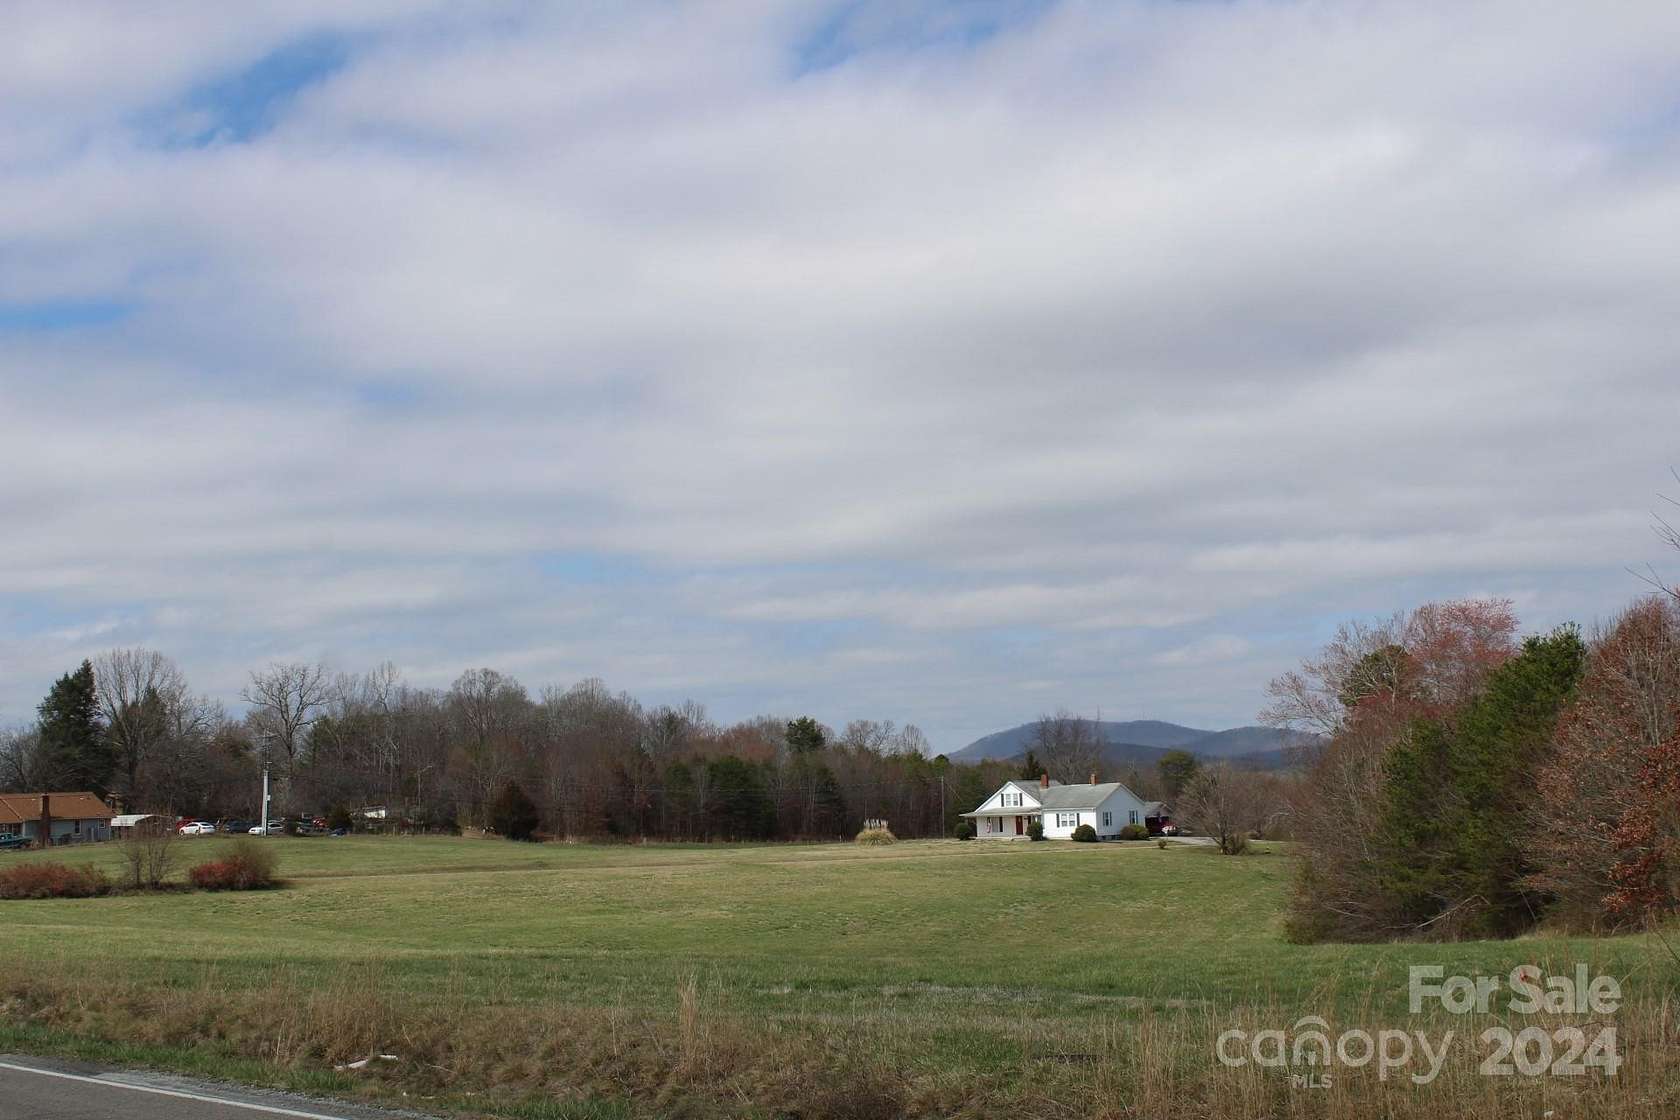 14.9 Acres of Commercial Land for Sale in Hudson, North Carolina